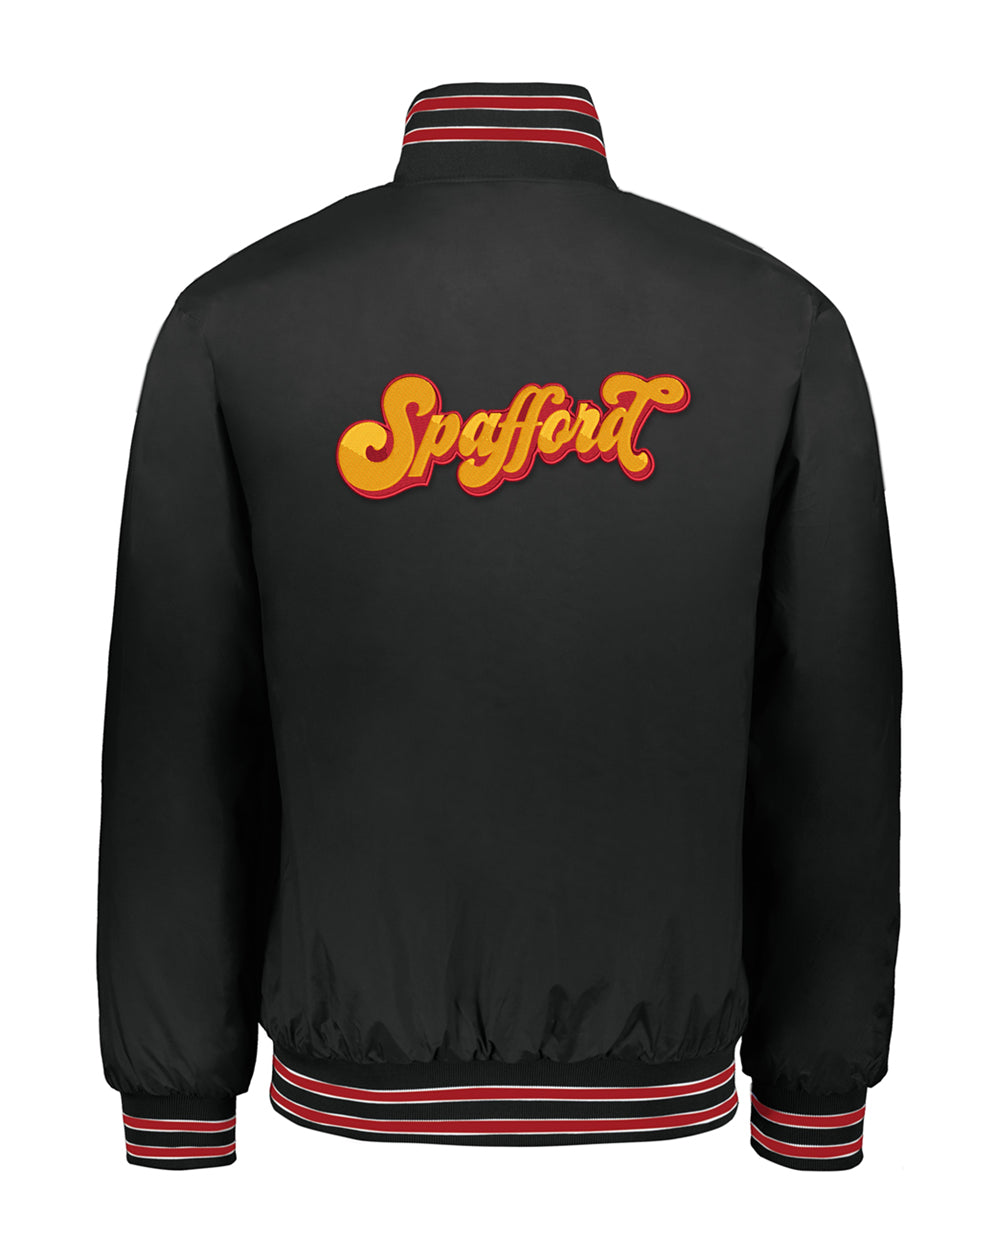 Spafford Heritage jacket - Black/Scarlet/White